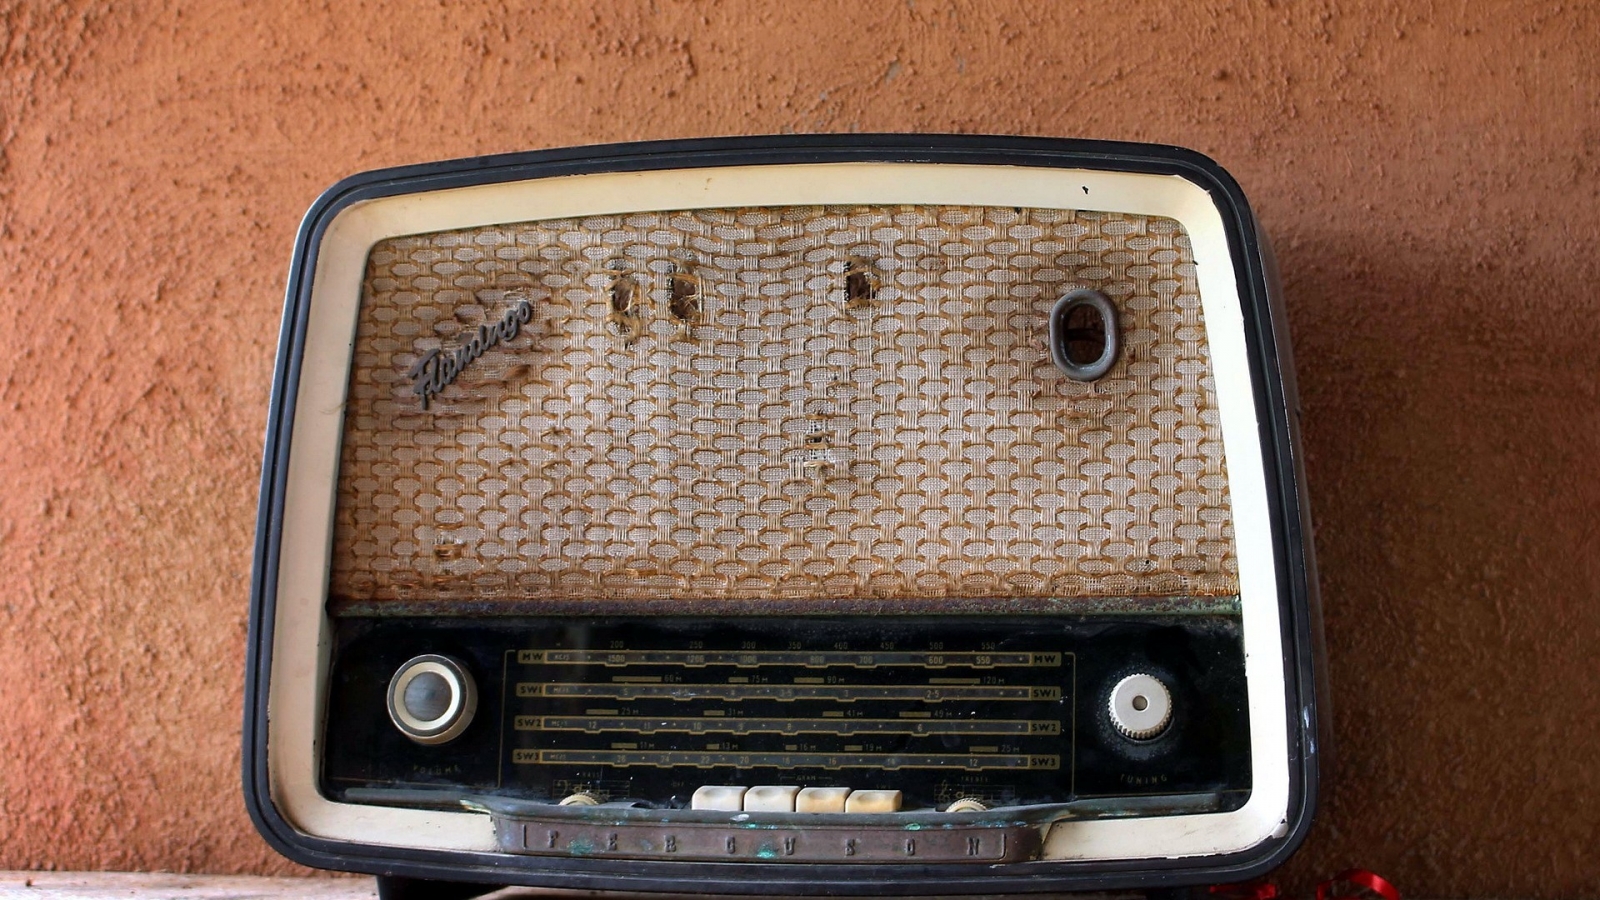 Vintage Radio Station for 1600 x 900 HDTV resolution